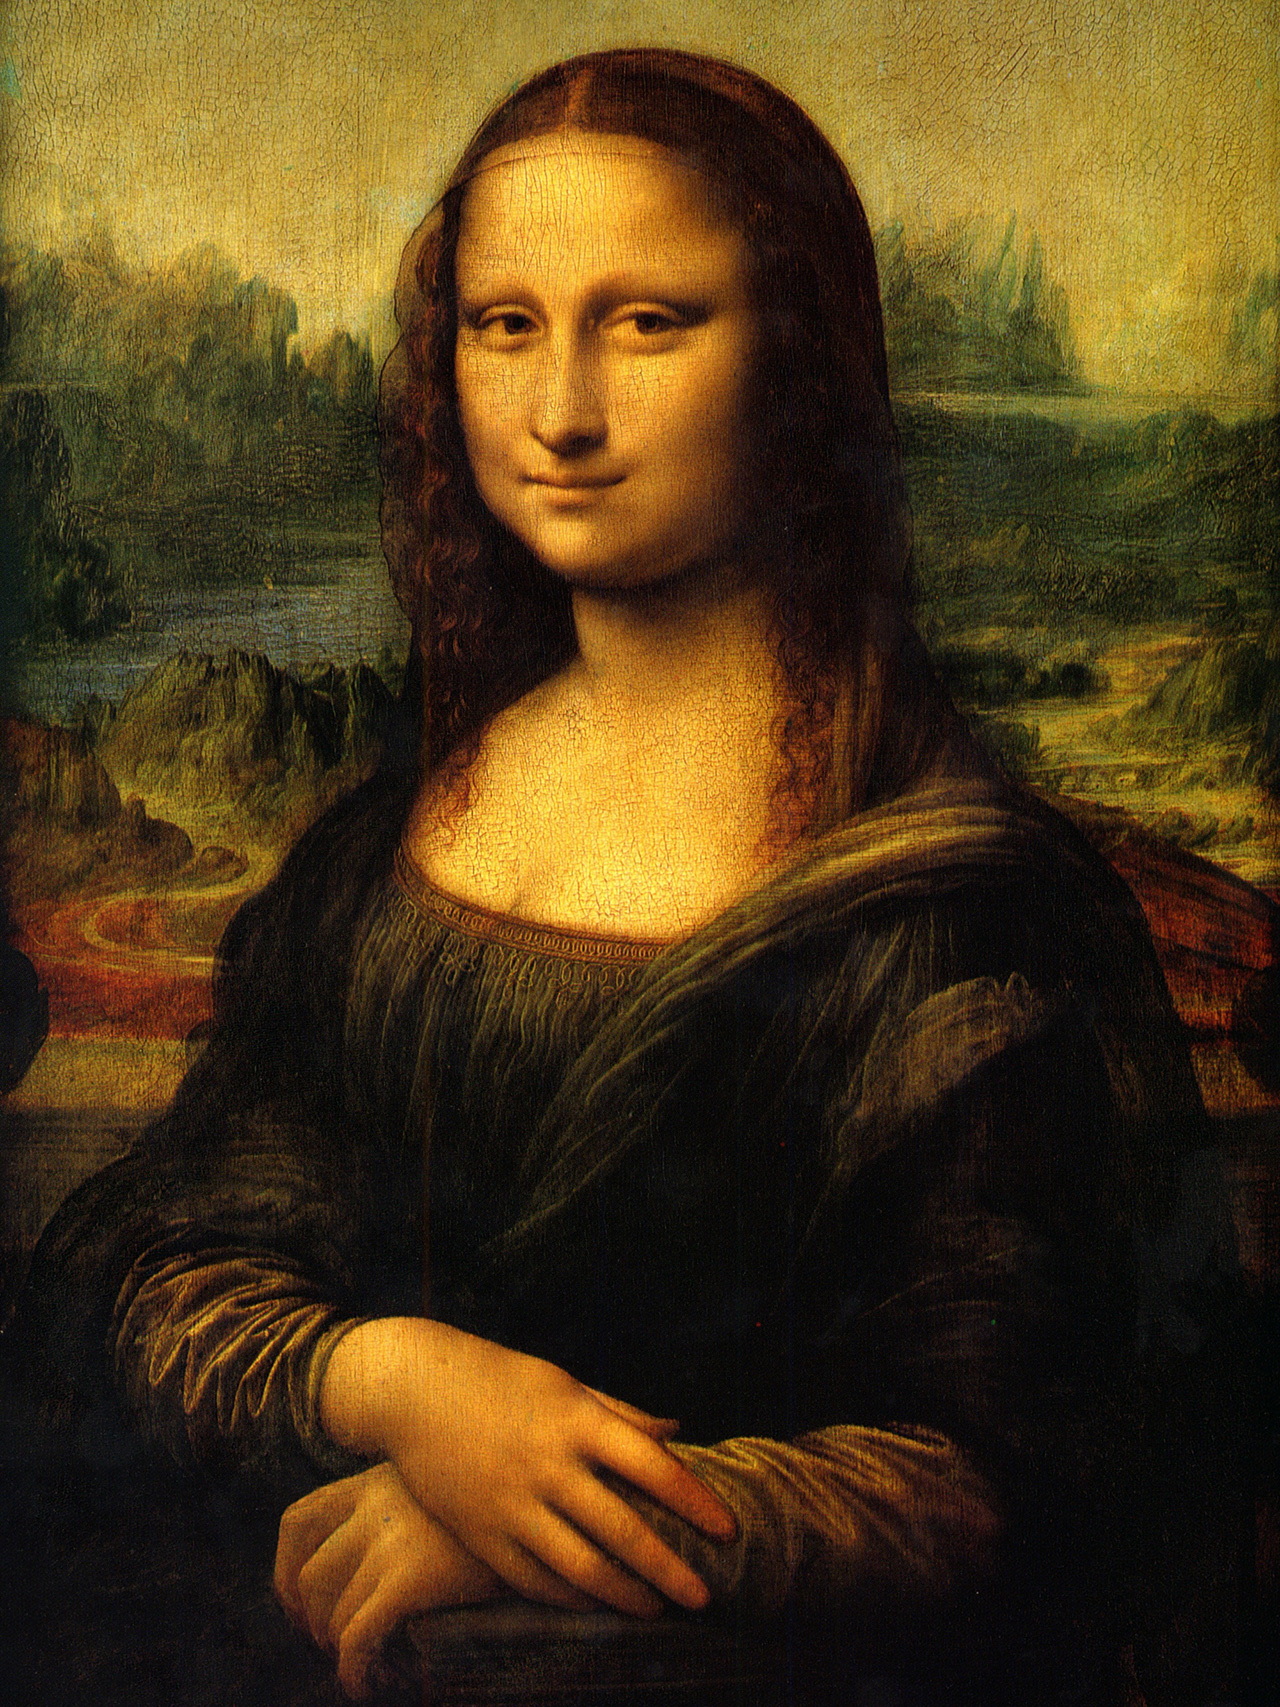 Da Vincijeva slika Mona Lise.